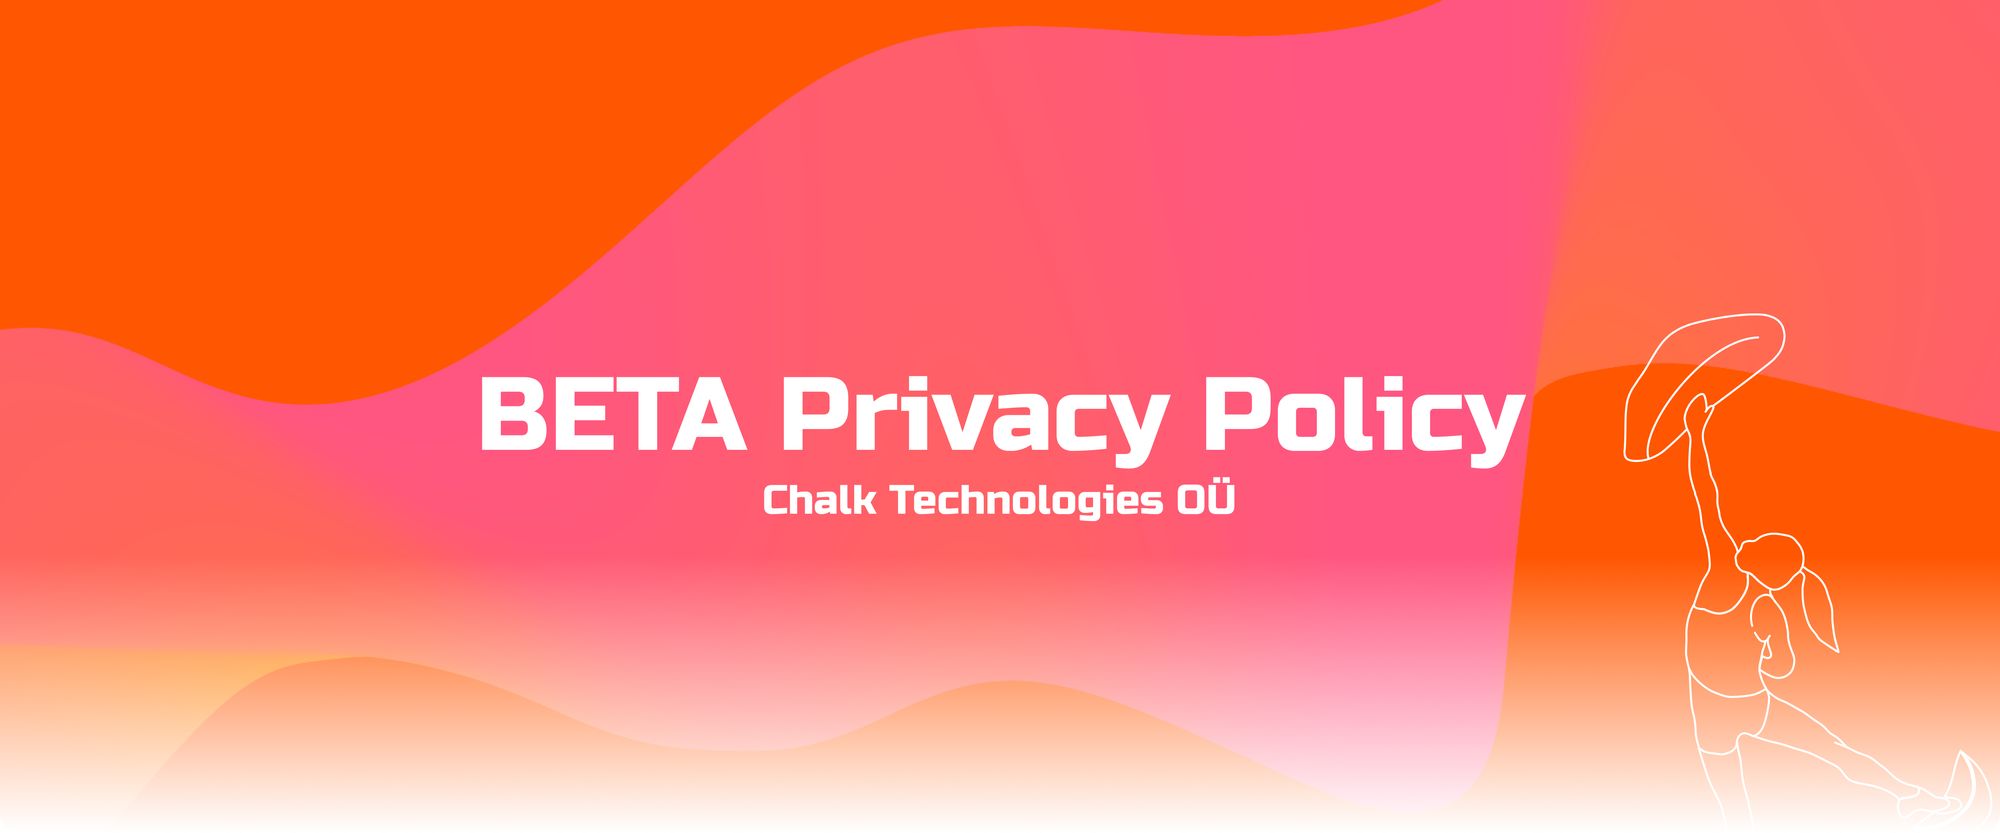 Privacy Policy BETA CHALK TECHNOLOGIES OU